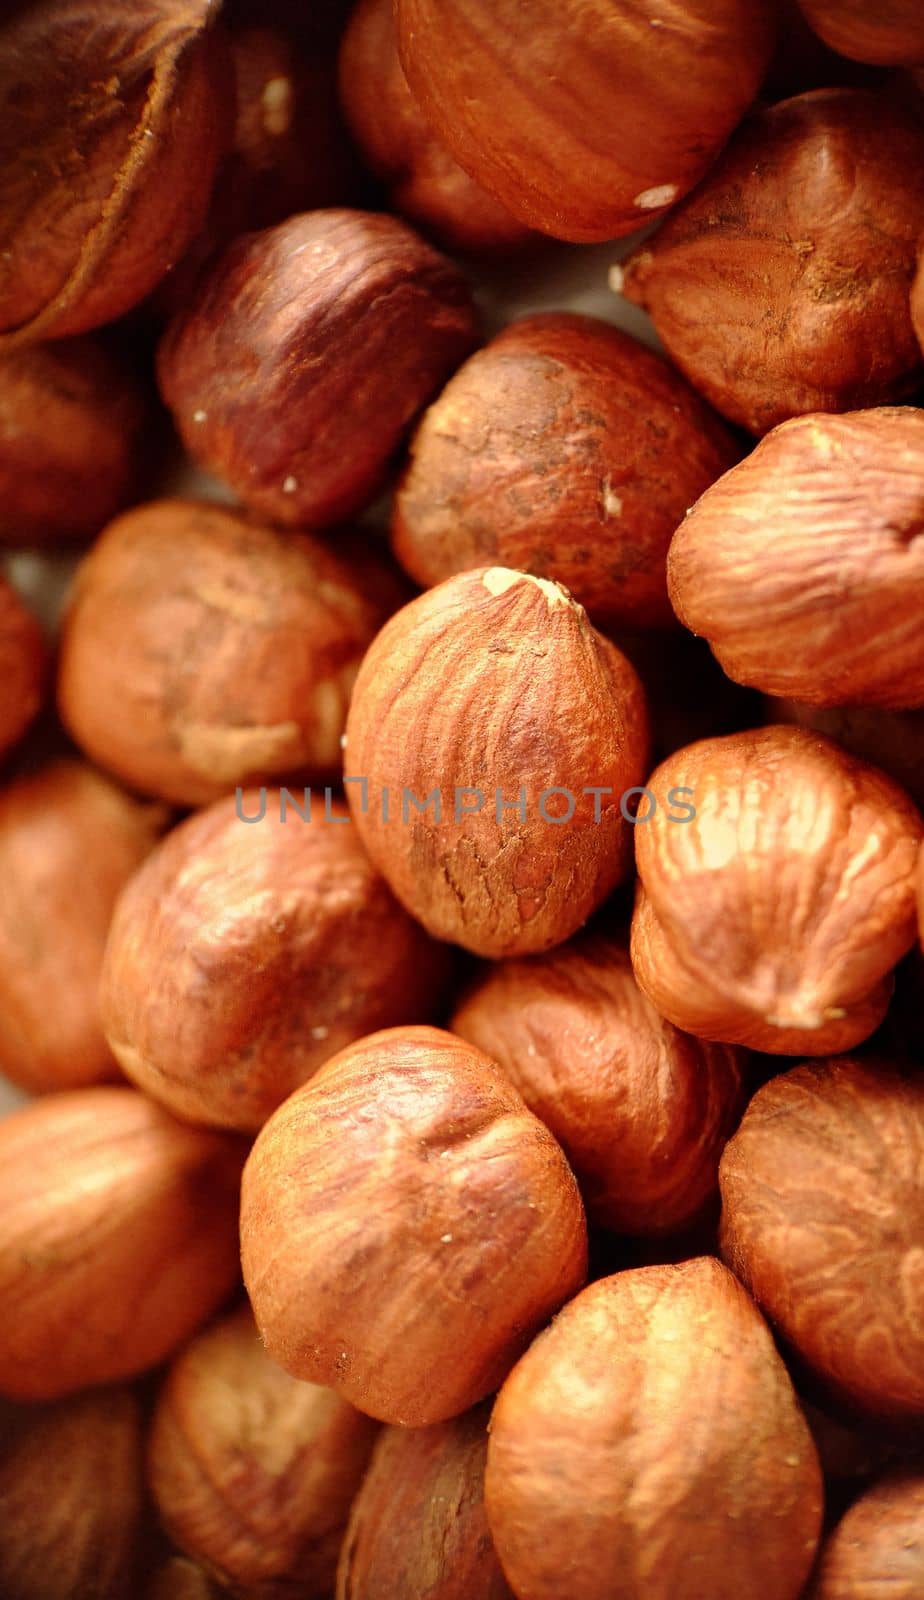 Large hazelnuts peeled without shell selective focus close-up by Mastak80